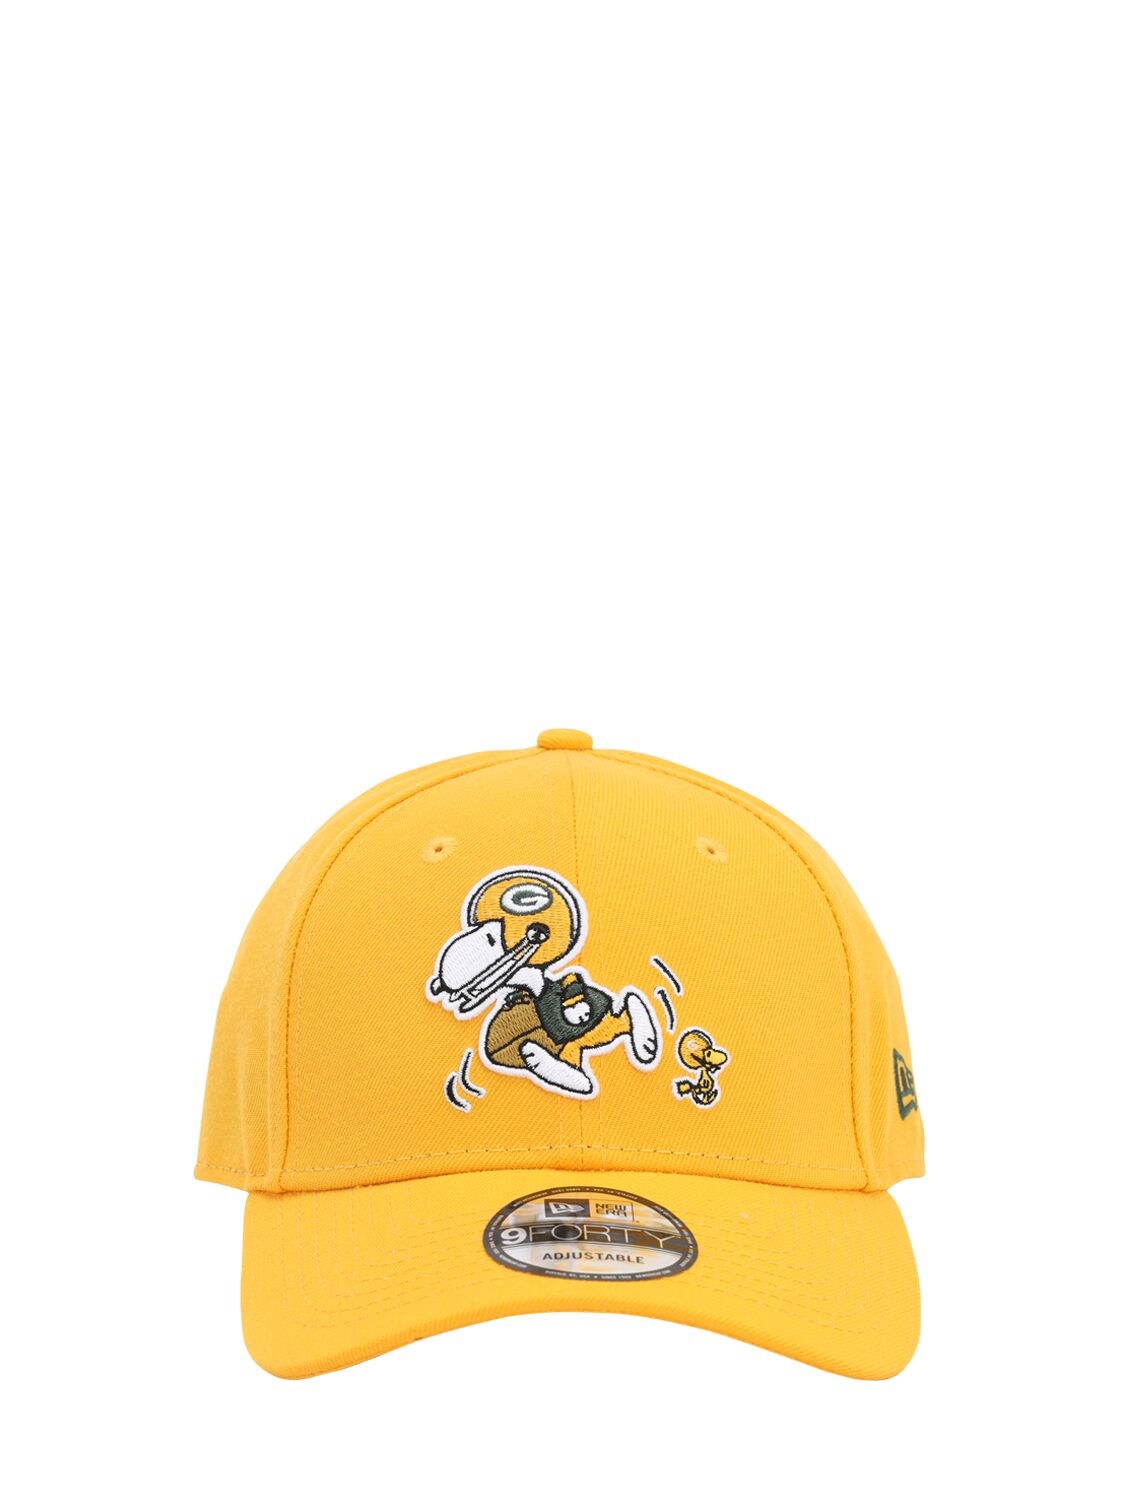 New Era Nfl X Peanuts Green Bay Packers Hat In Yellow